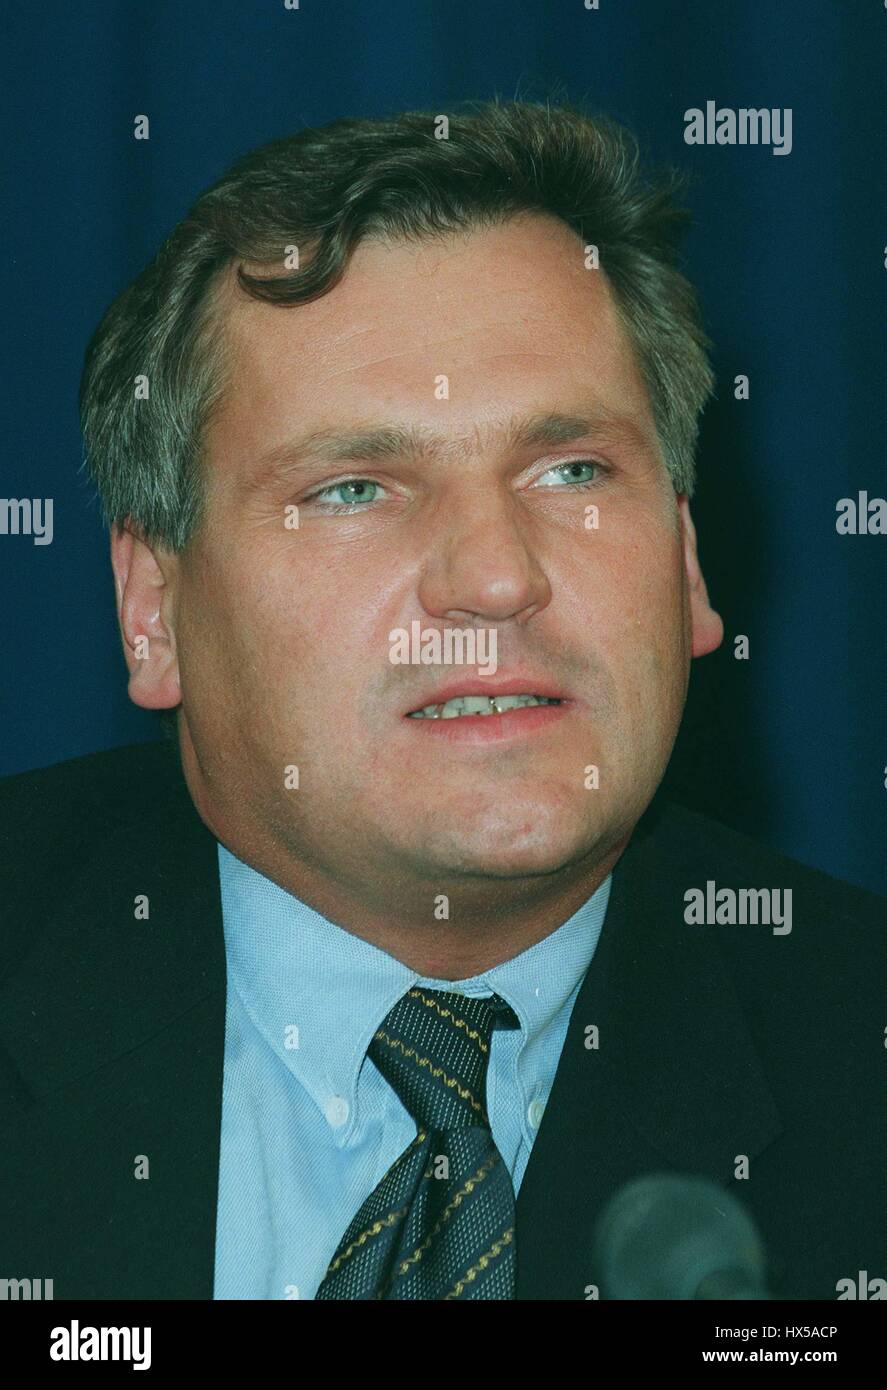 ALEKSANDER KWASNIEWSKI PRESIDENT OF POLAND 05 November 1996 Stock Photo